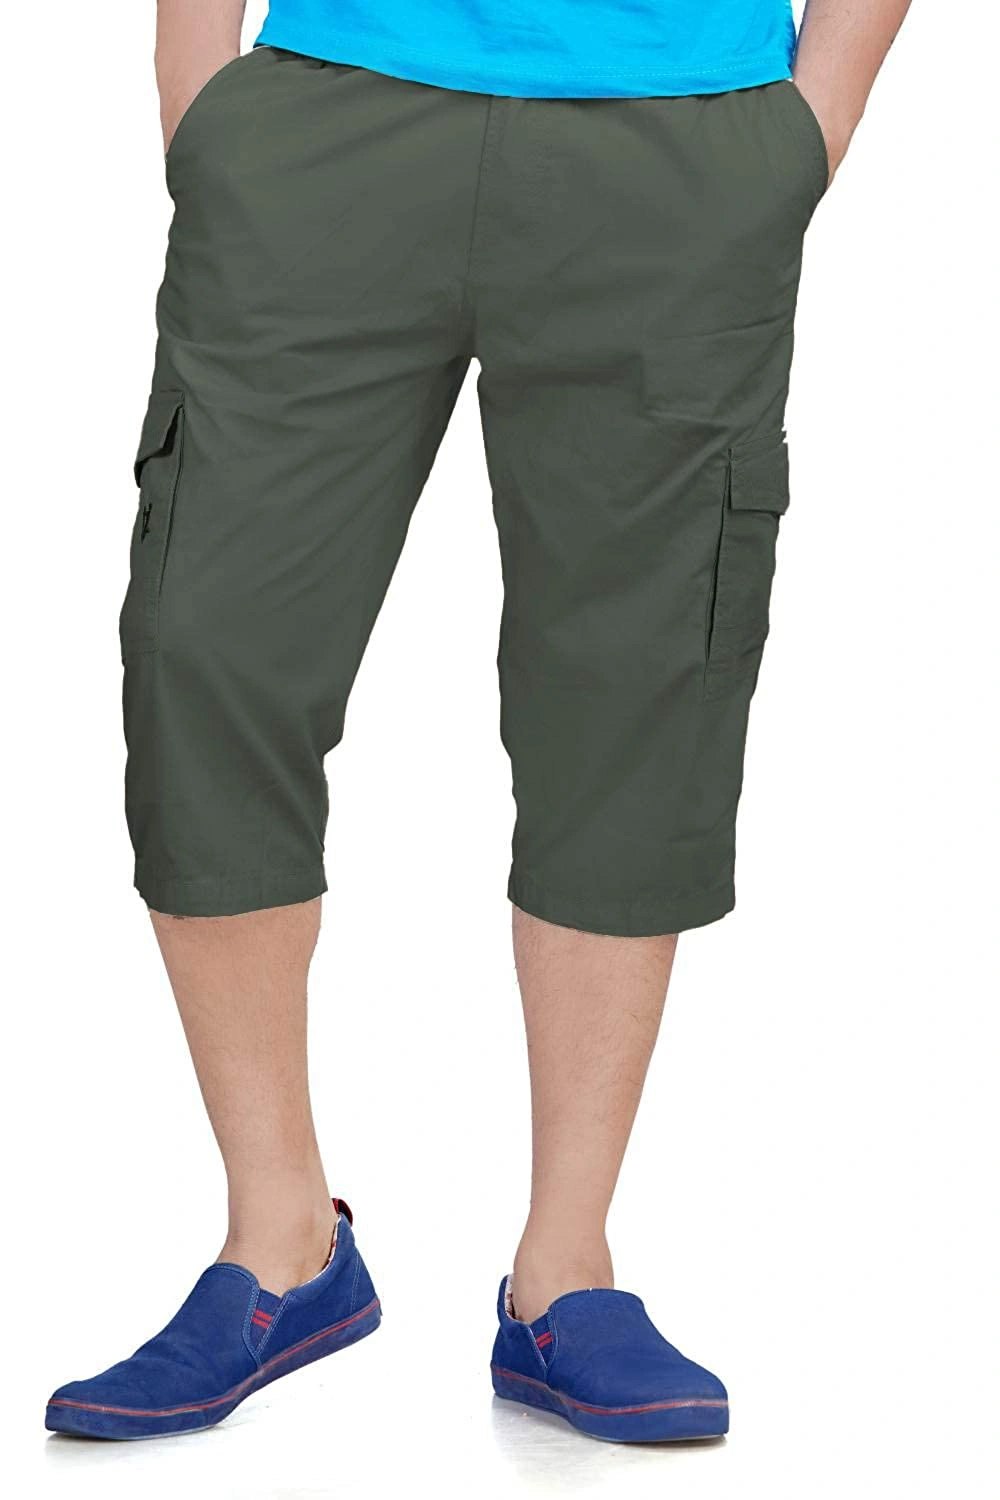 HYPERNATION Green Color Cotton Men's 3/4th Shorts (HYPM03098)